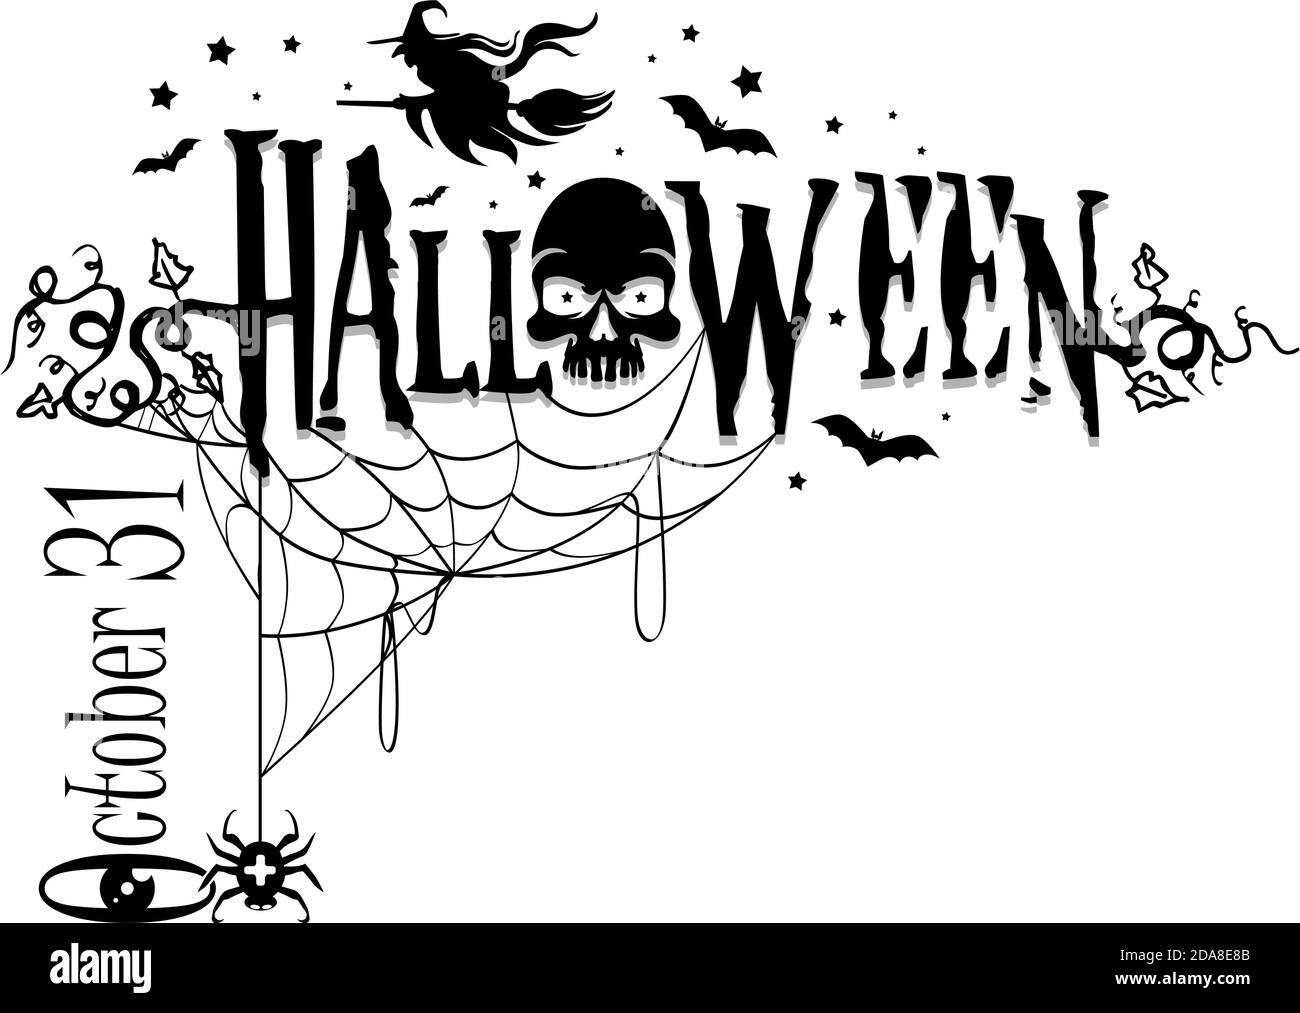 Halloween poster - angular design element with horror elements Stock Vector